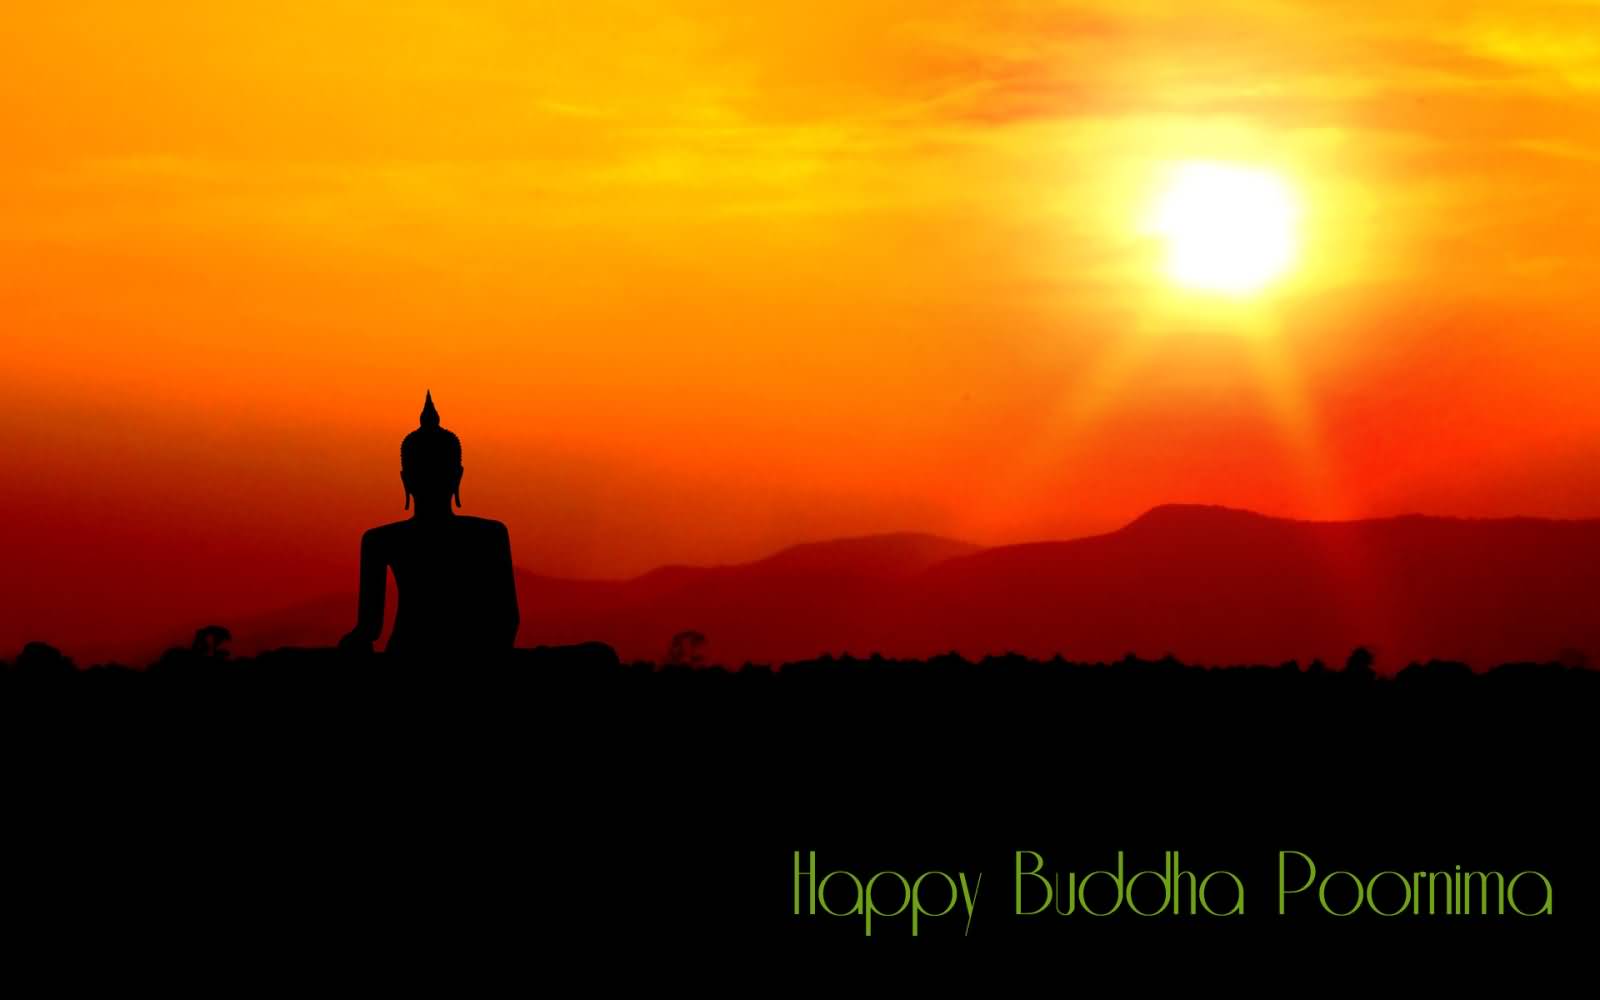 Happy Buddha Poornima Silhouette View Of Lord Buddha Statue